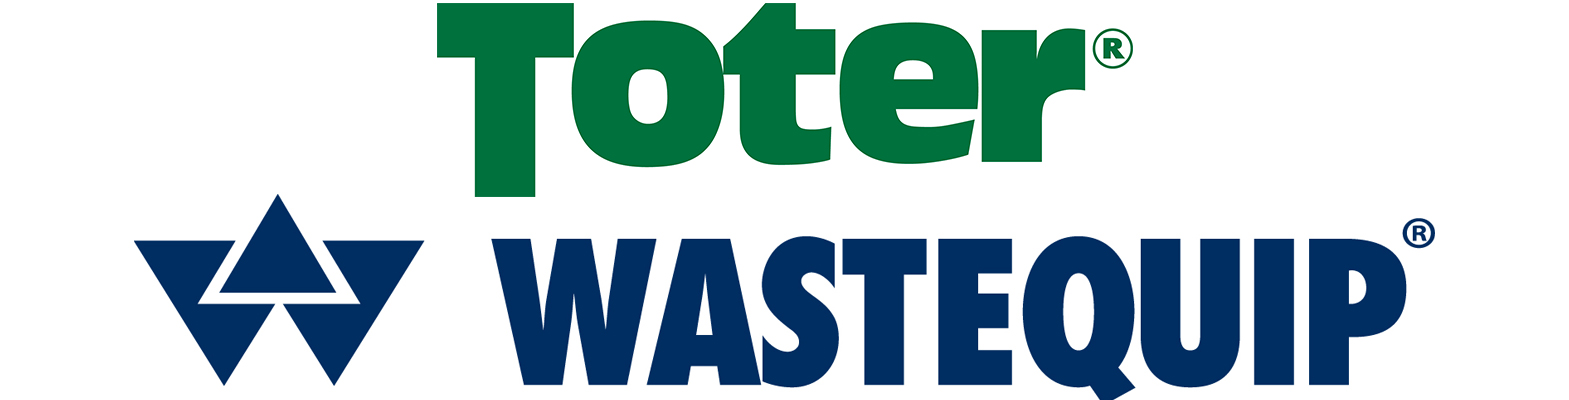 Toter / Wastequip